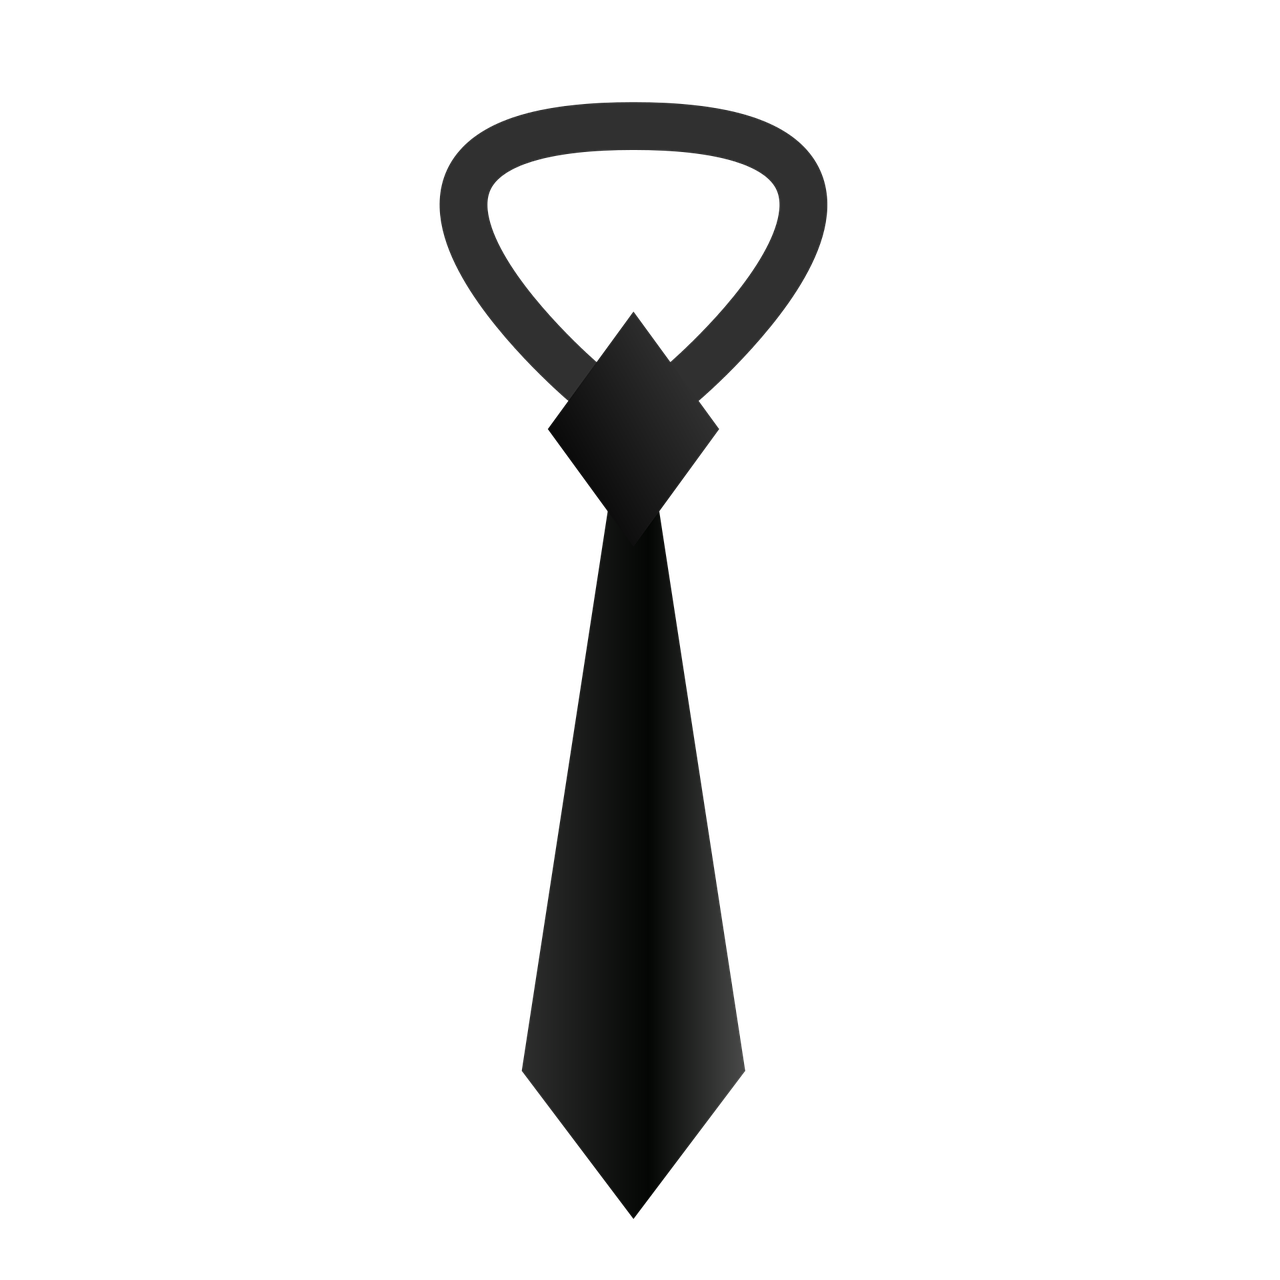 Black tie on a white background